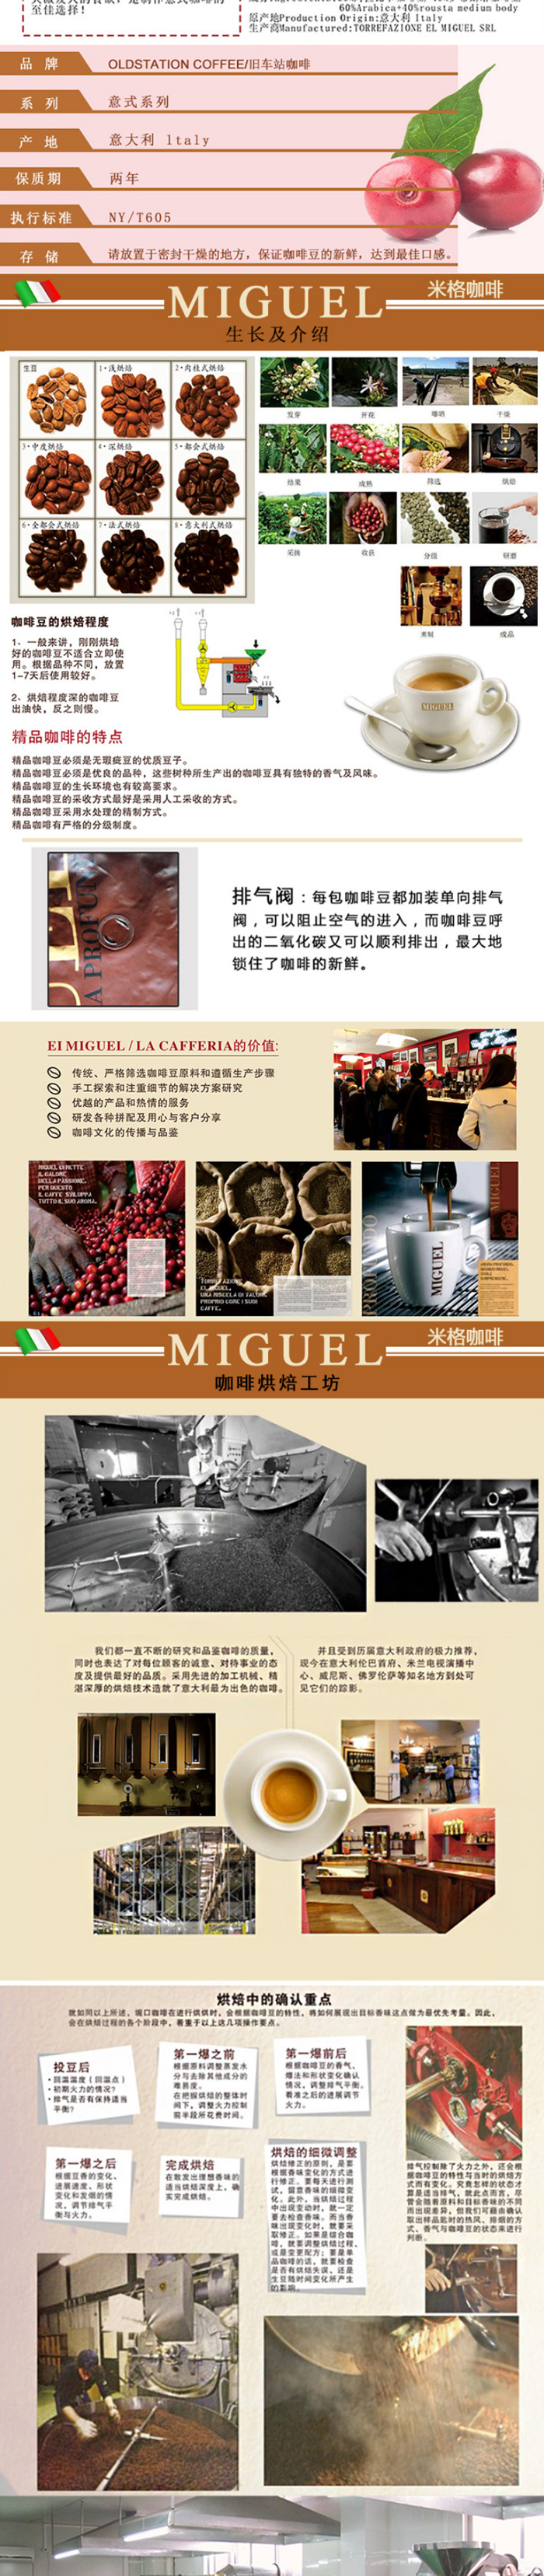 MIGUEL米格咖啡豆-淘宝网_03.jpg